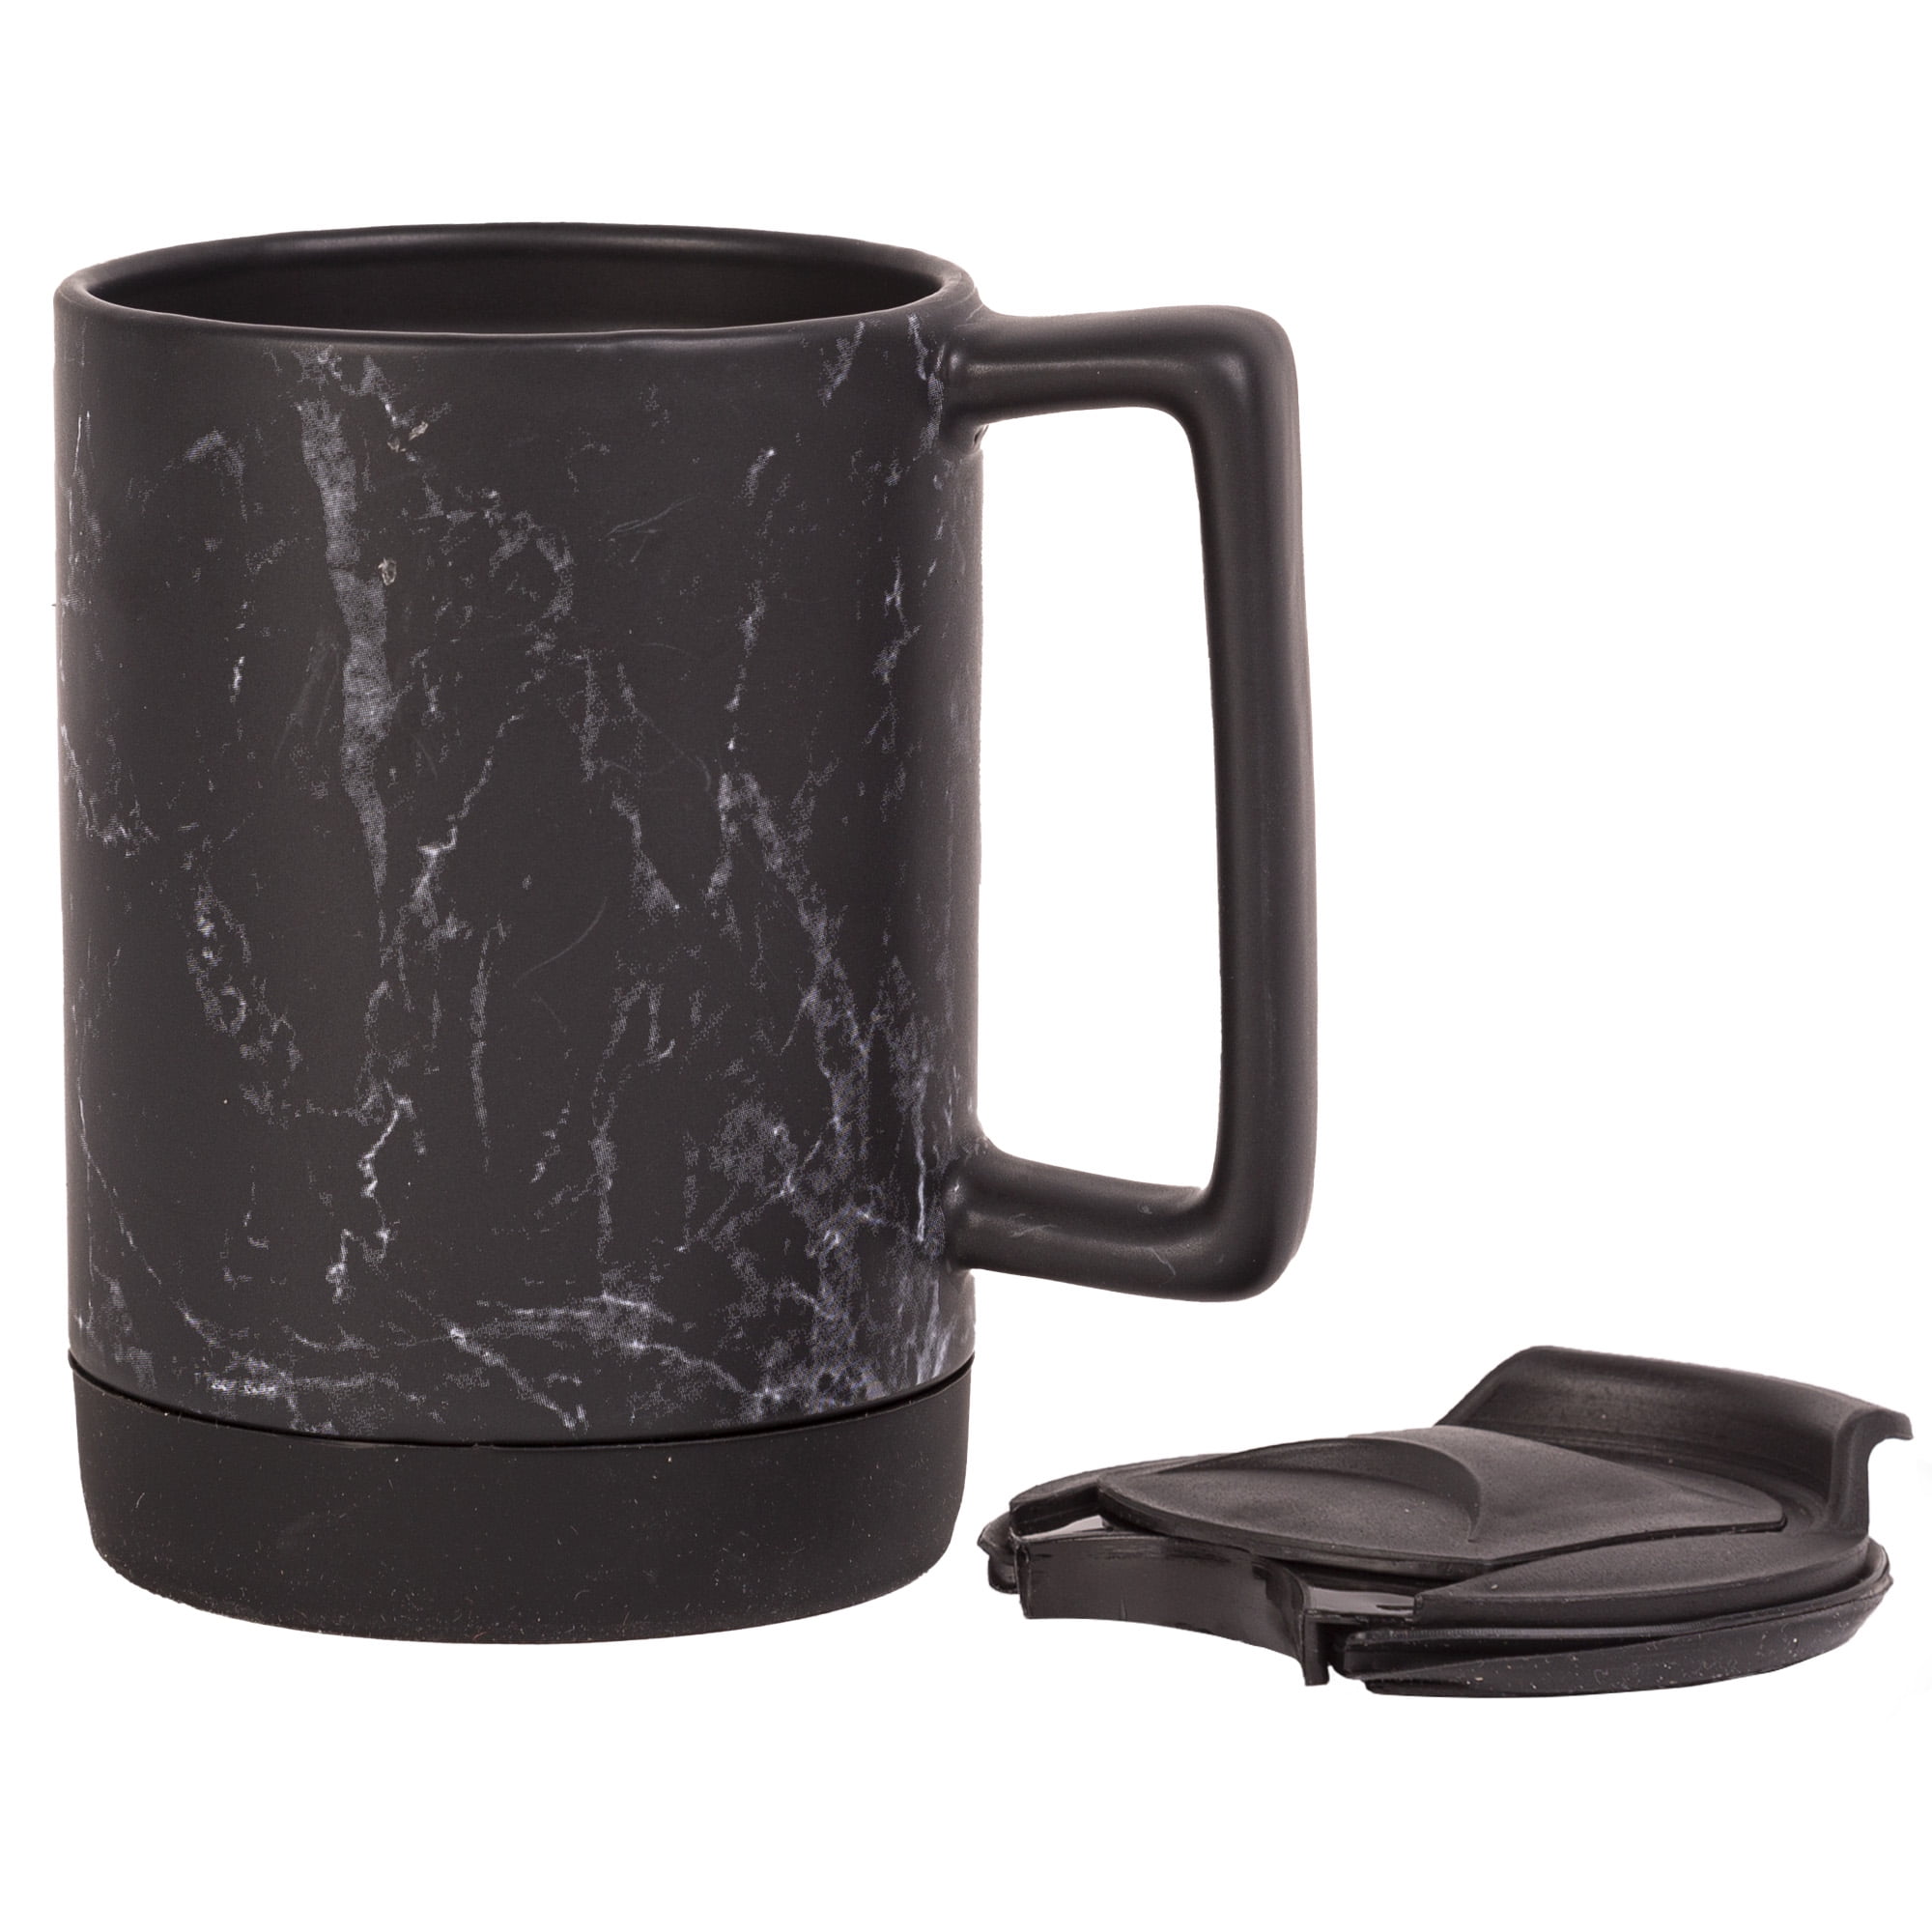 WAFE - Black Magic Leak Proof Travel Coffee Mug - Best Foldable Coffee Mugs